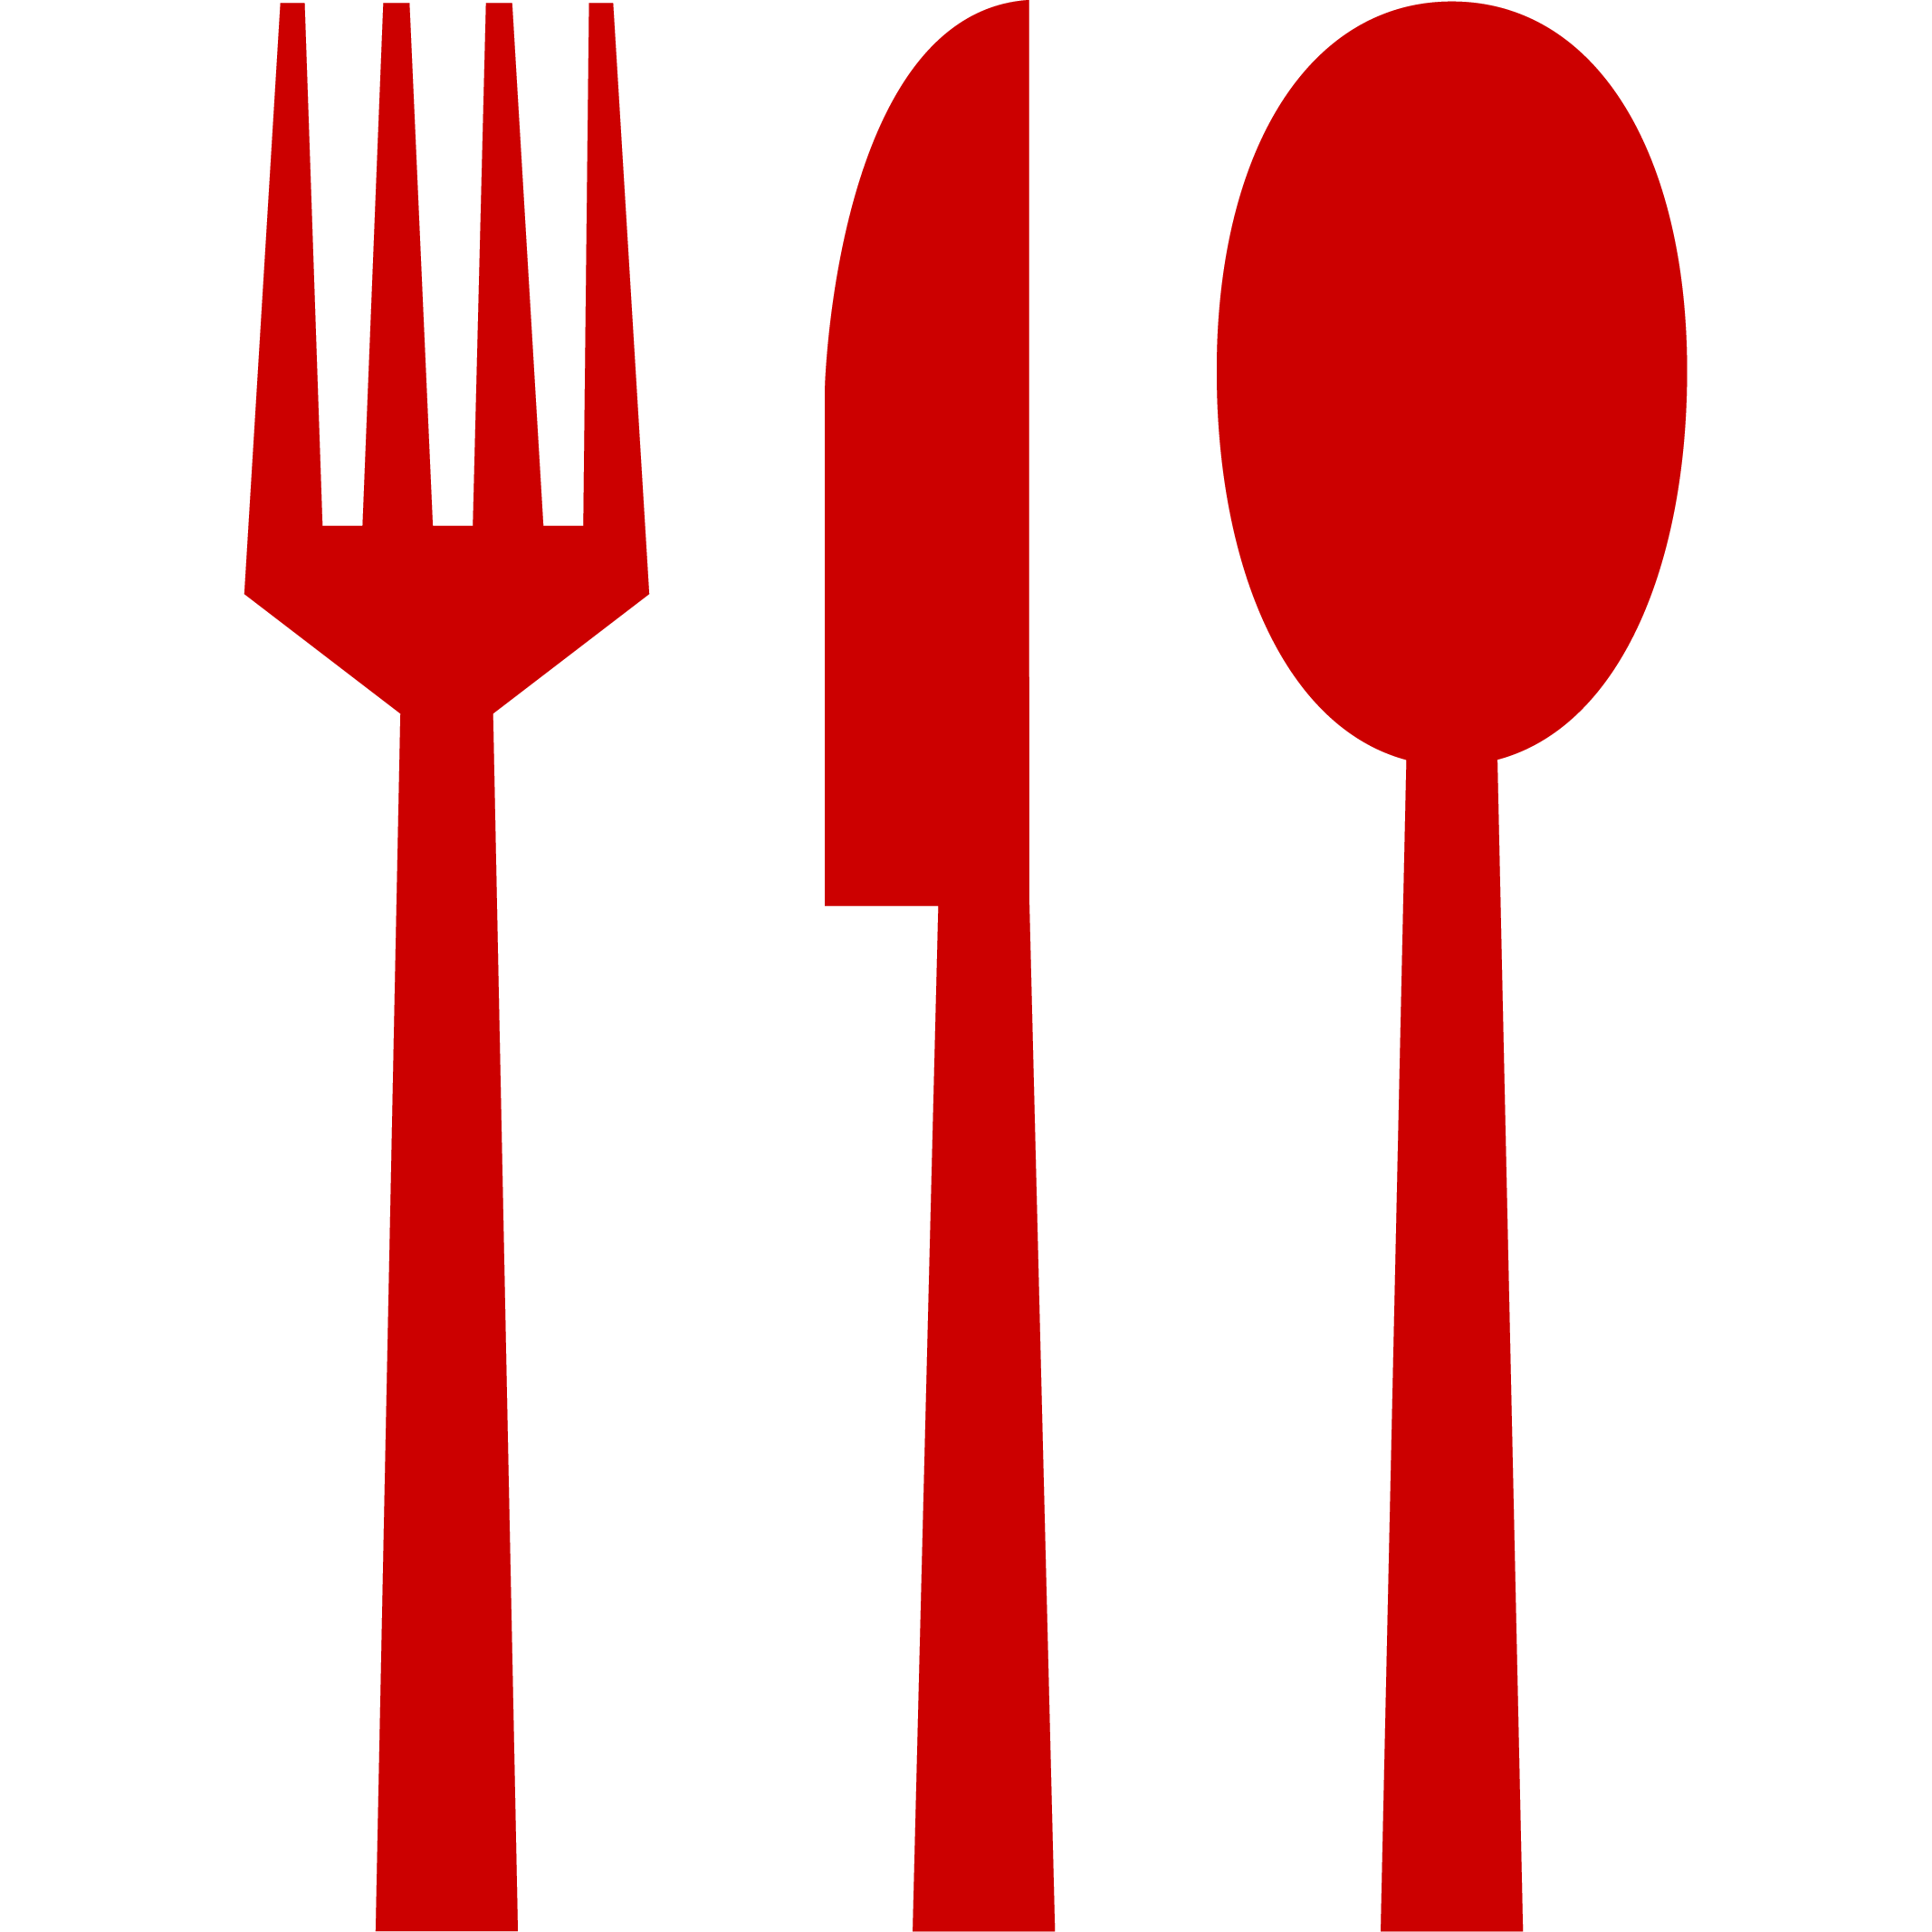 utensils